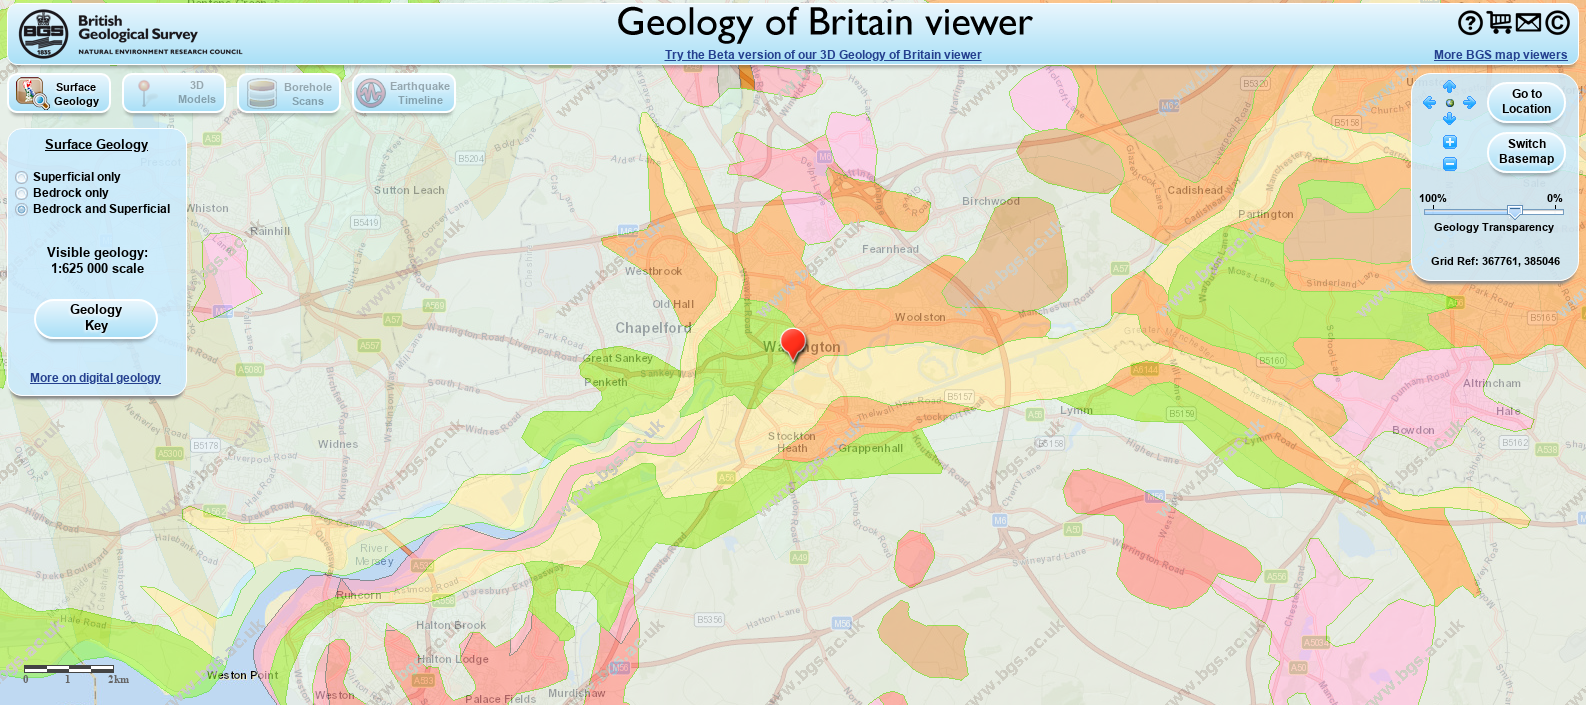 Geology of Warrington surfaceBedrock Screenshot 2020 03 13 22 01 37